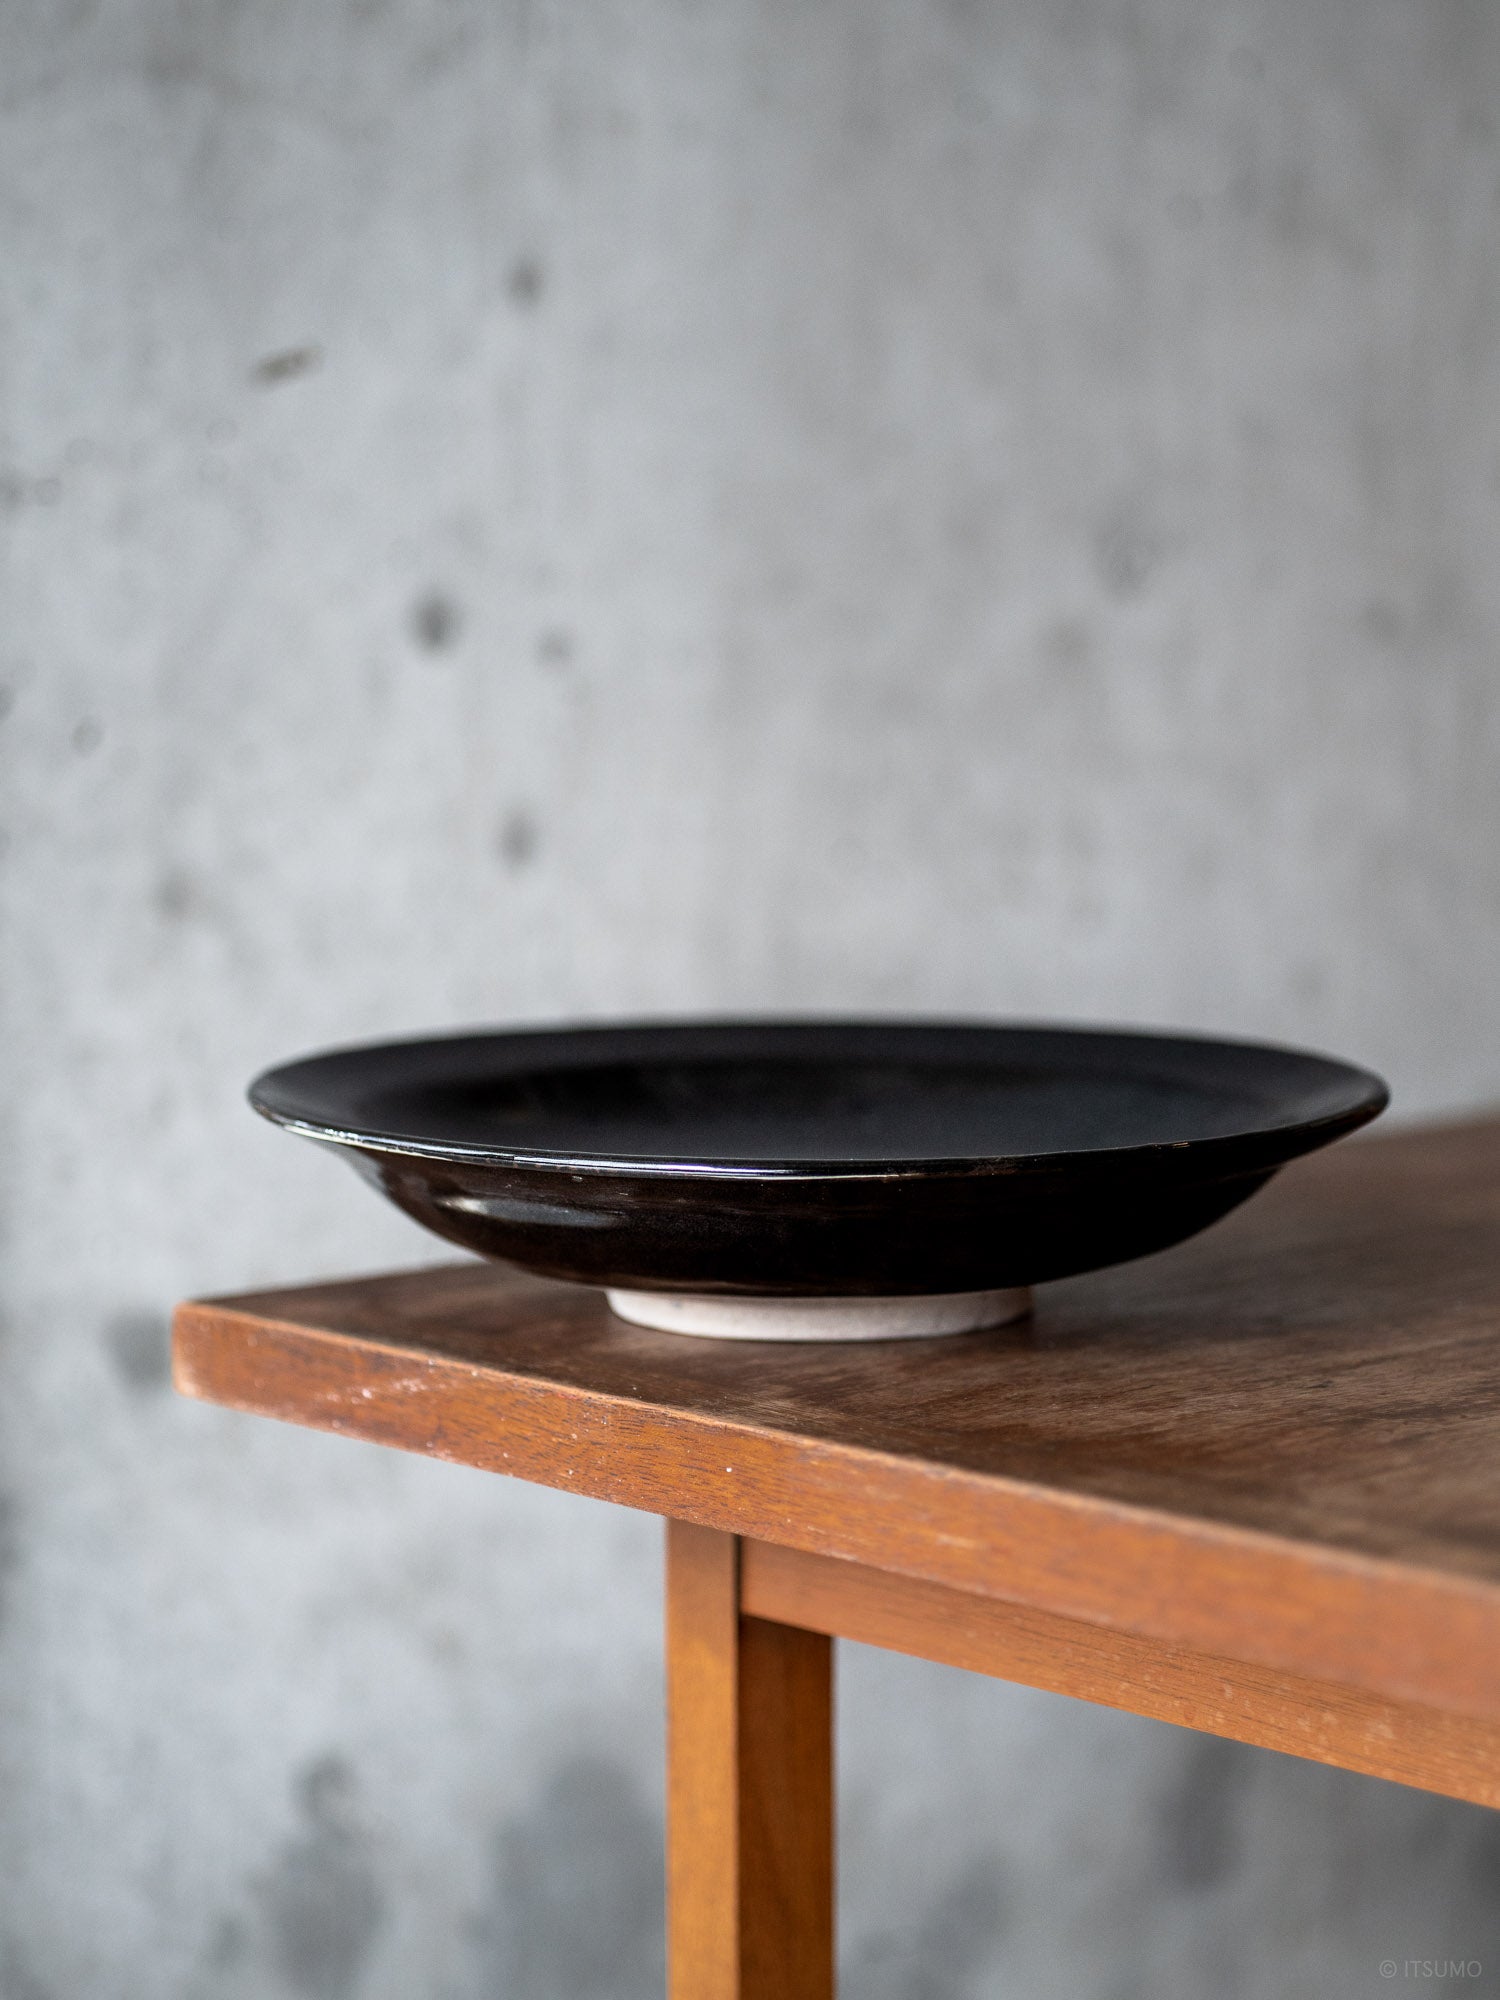 Iga ware round ceramic plate in Kuroame black glaze